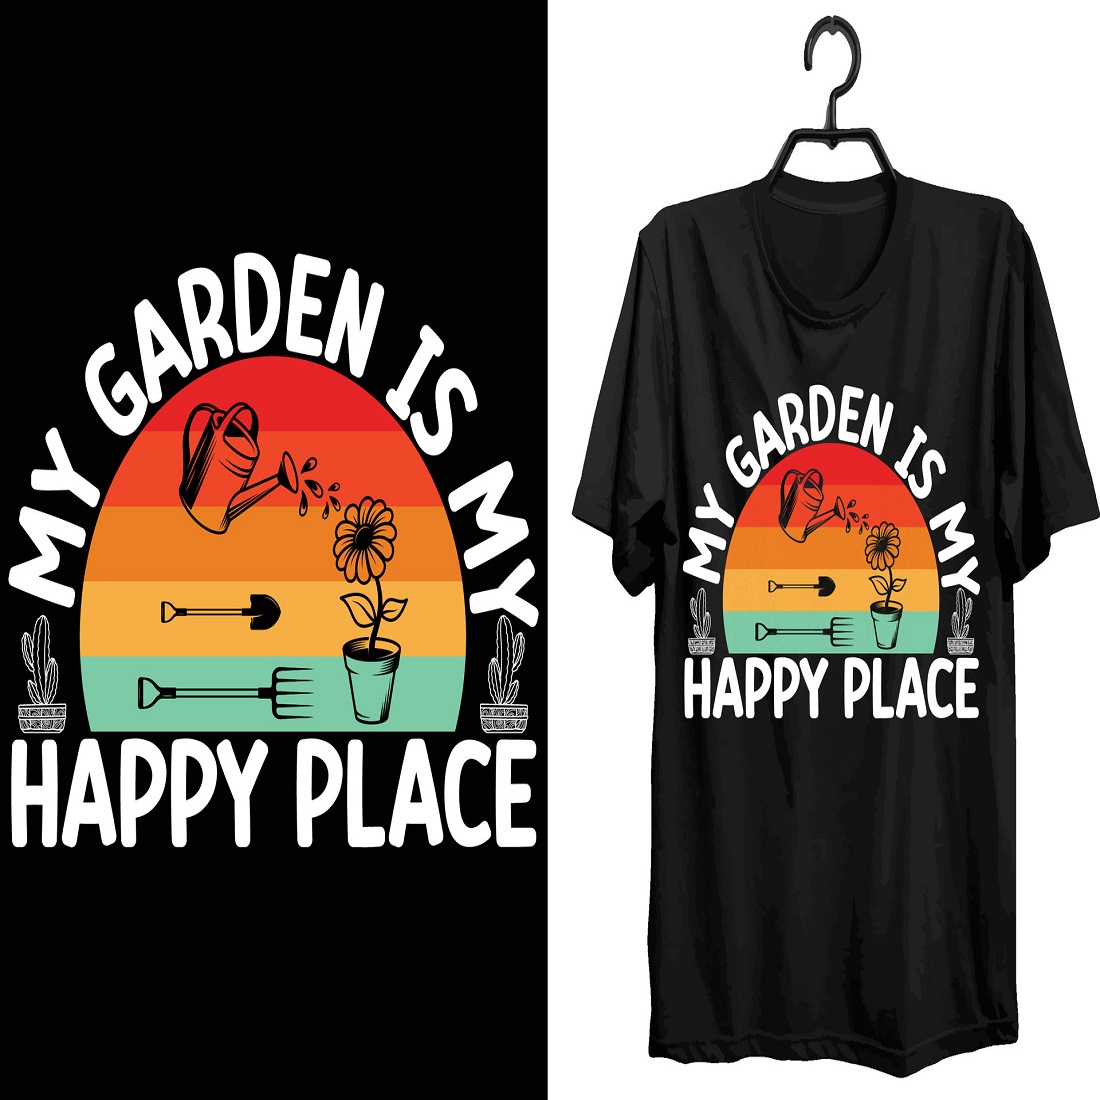 Gardening t-shirt design funny gift item gardening t-shirt preview image.